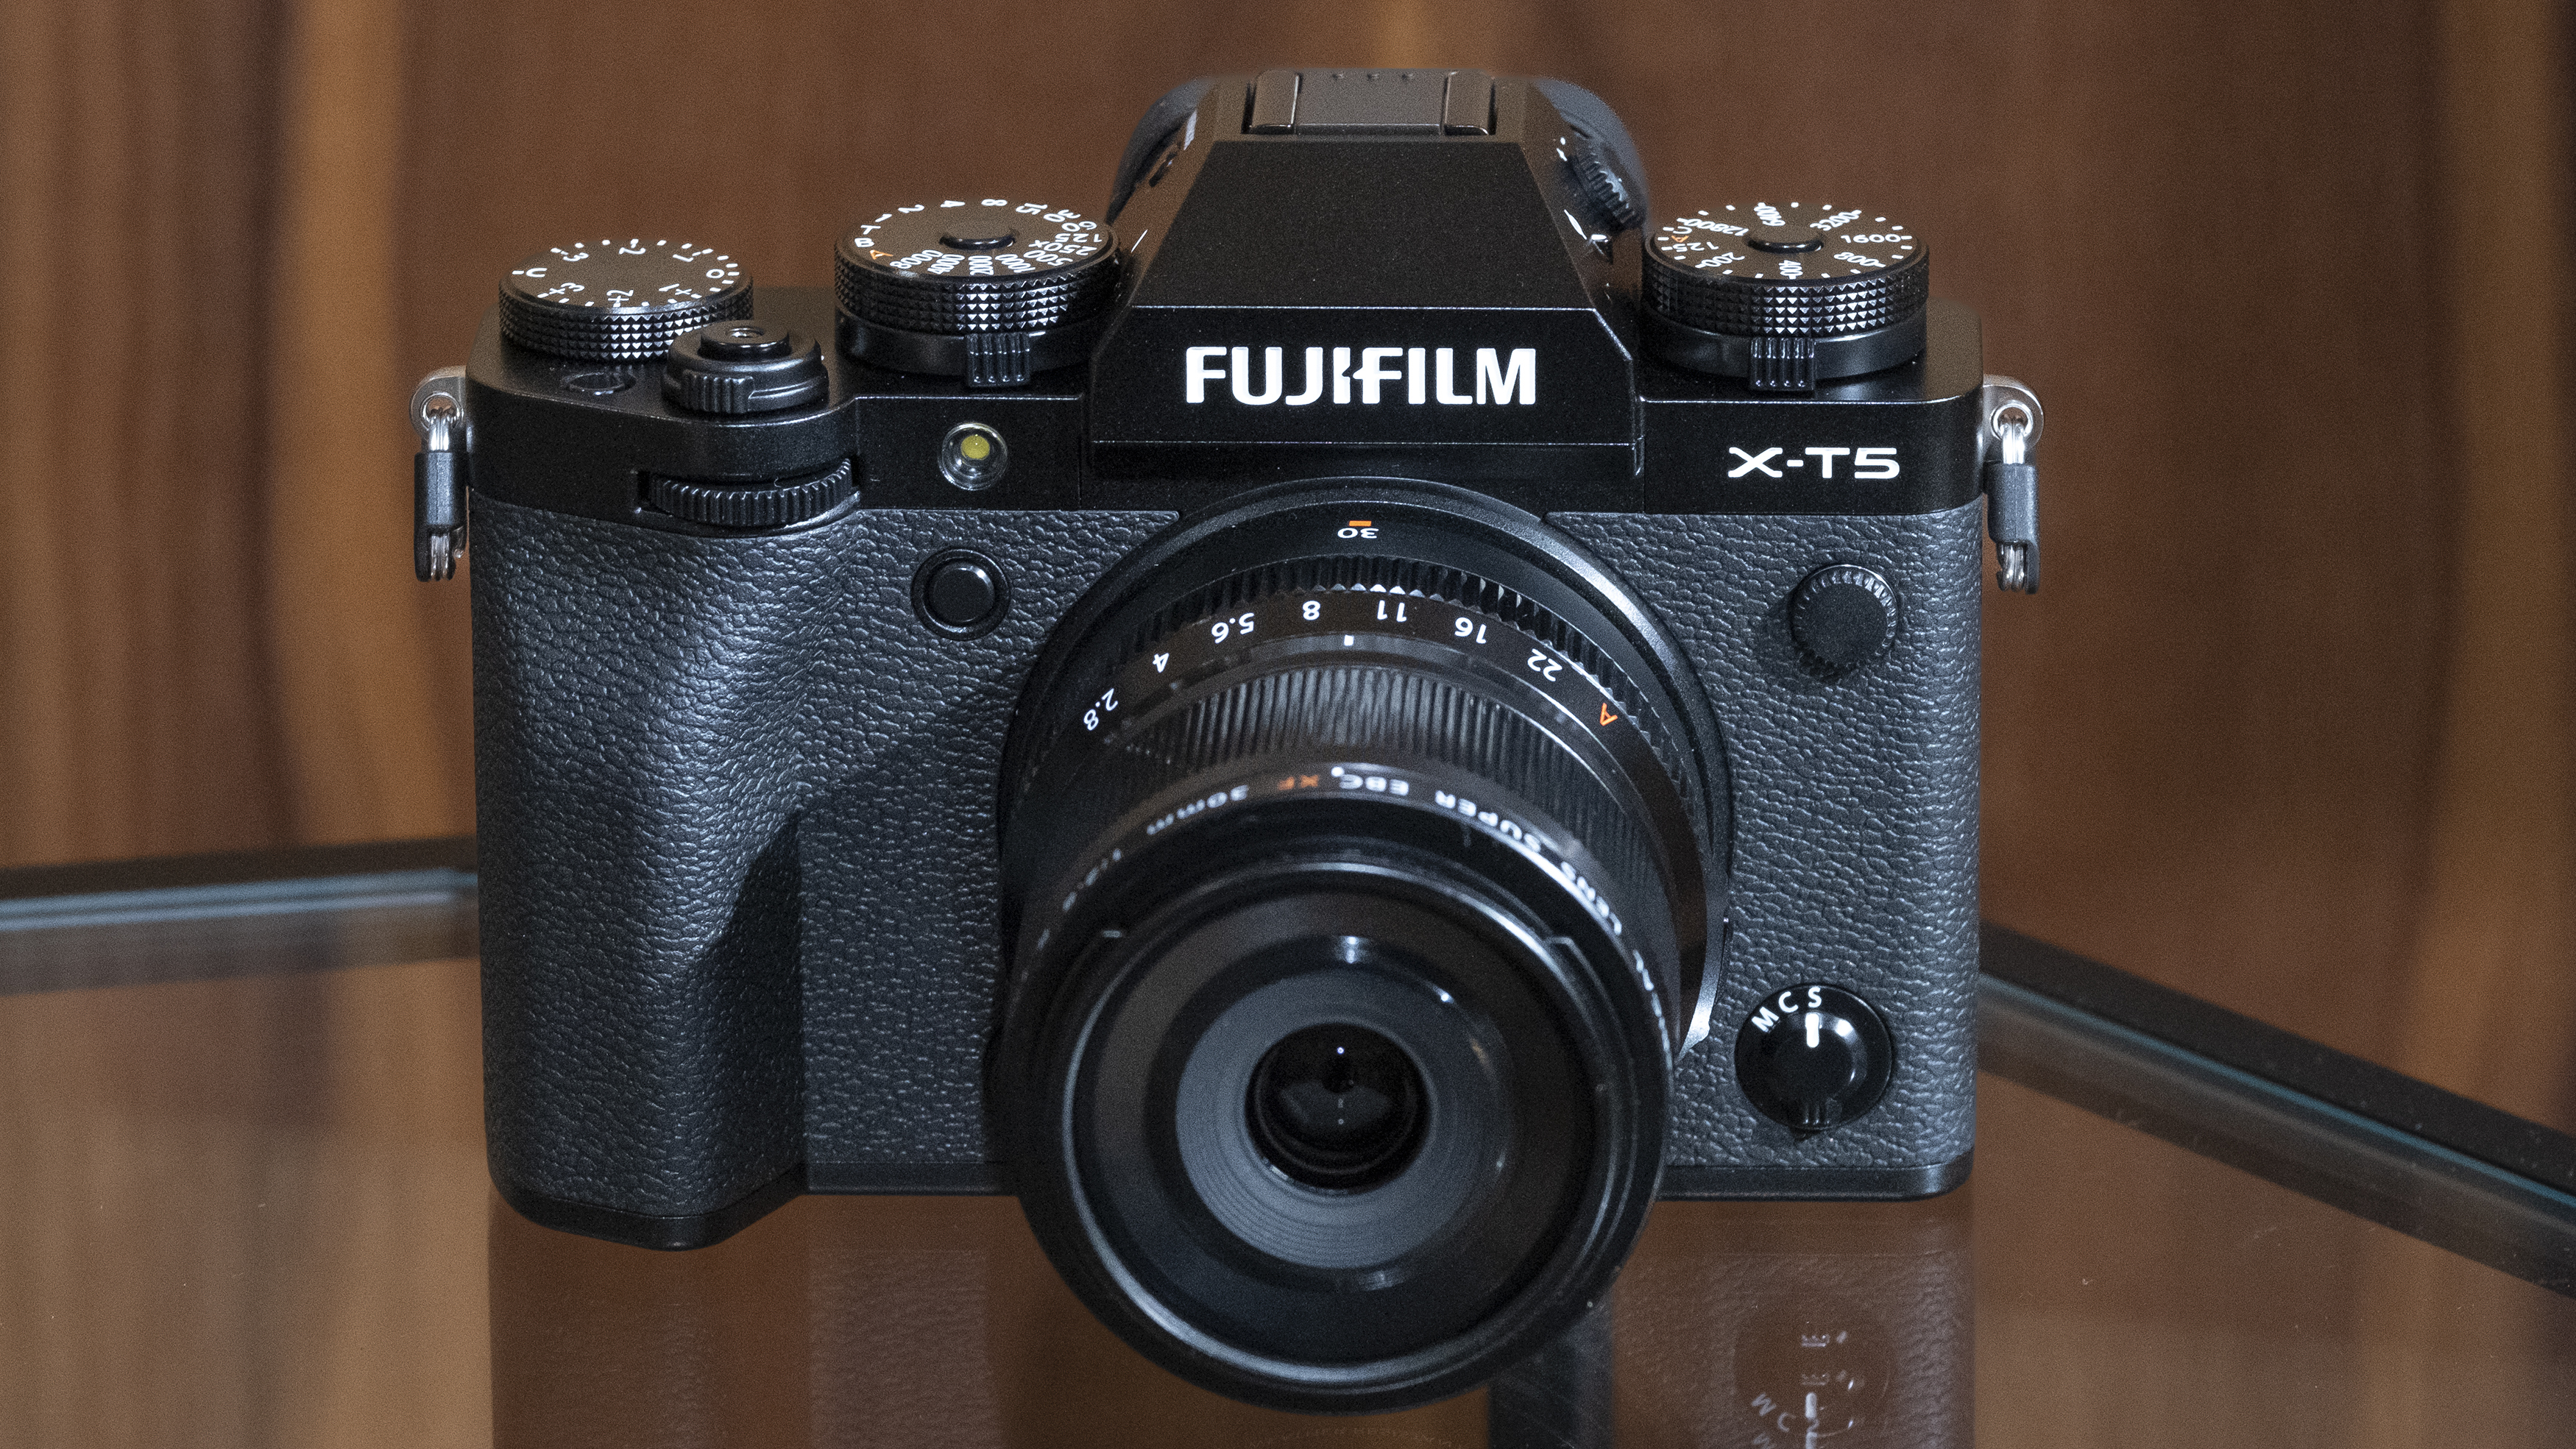 The Fujifilm Камера X-T5 стоит на столе